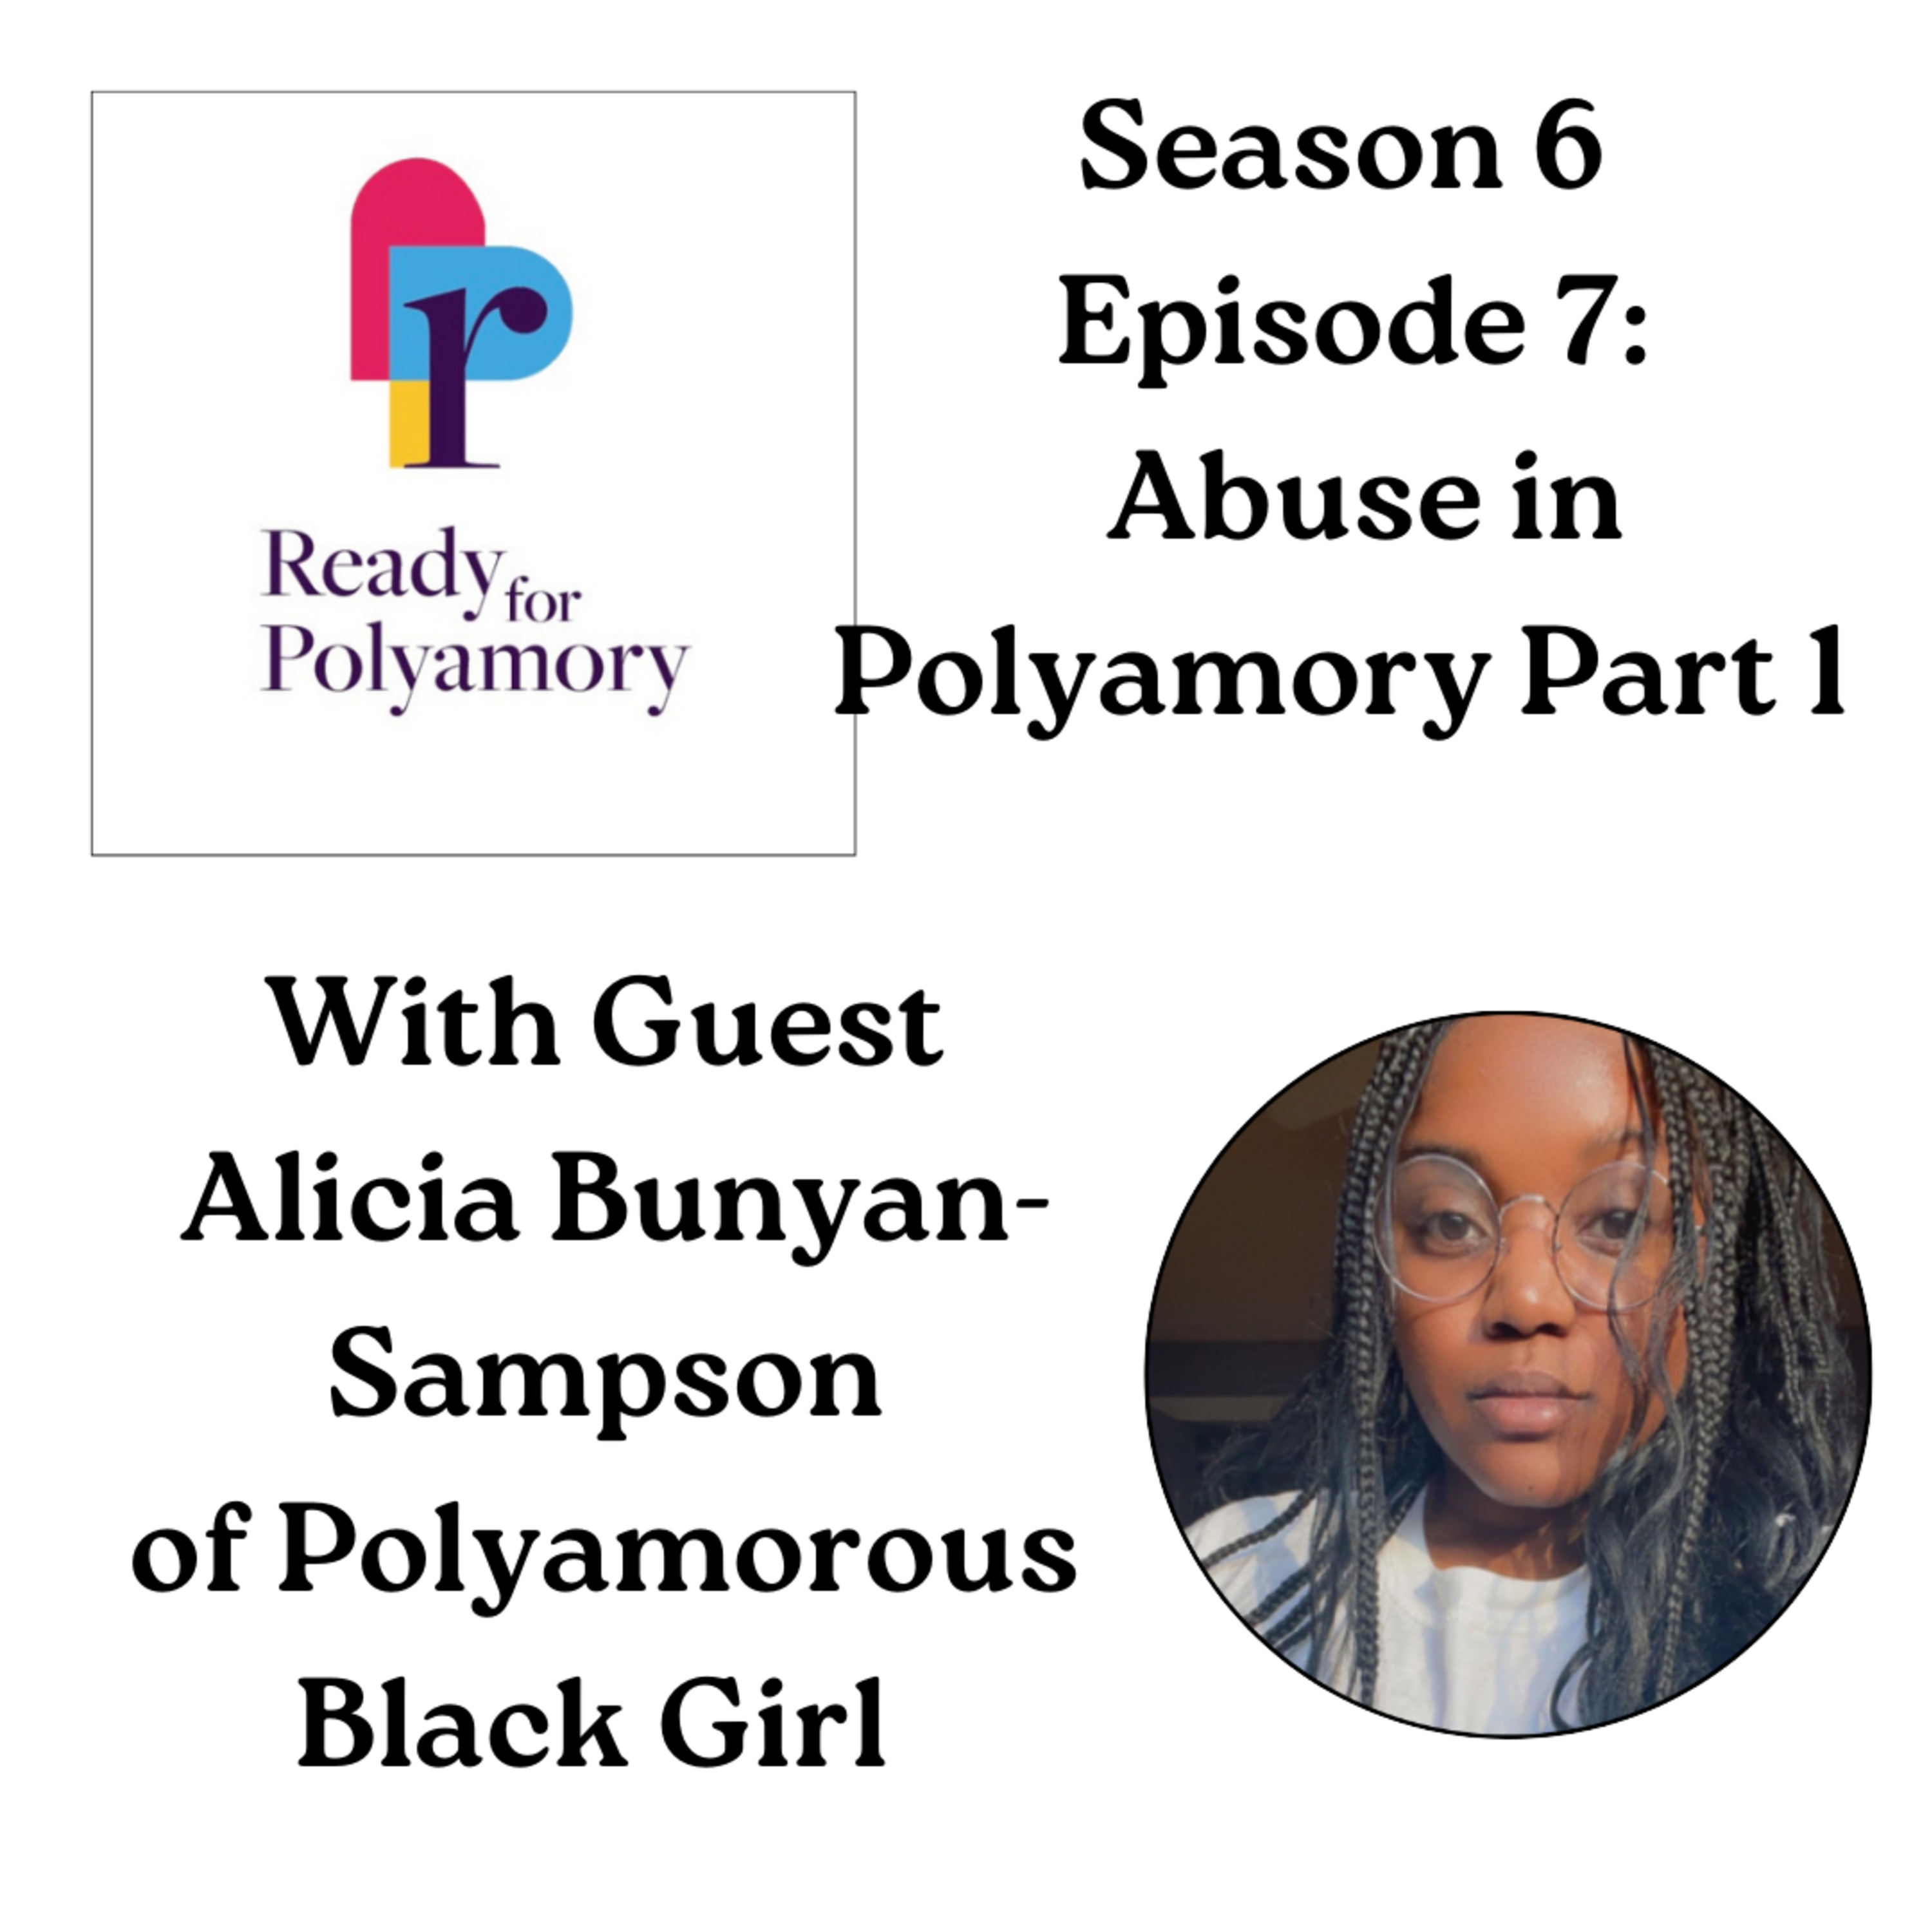 Season 6 Episode 7: Abuse in Polyamory Part 1